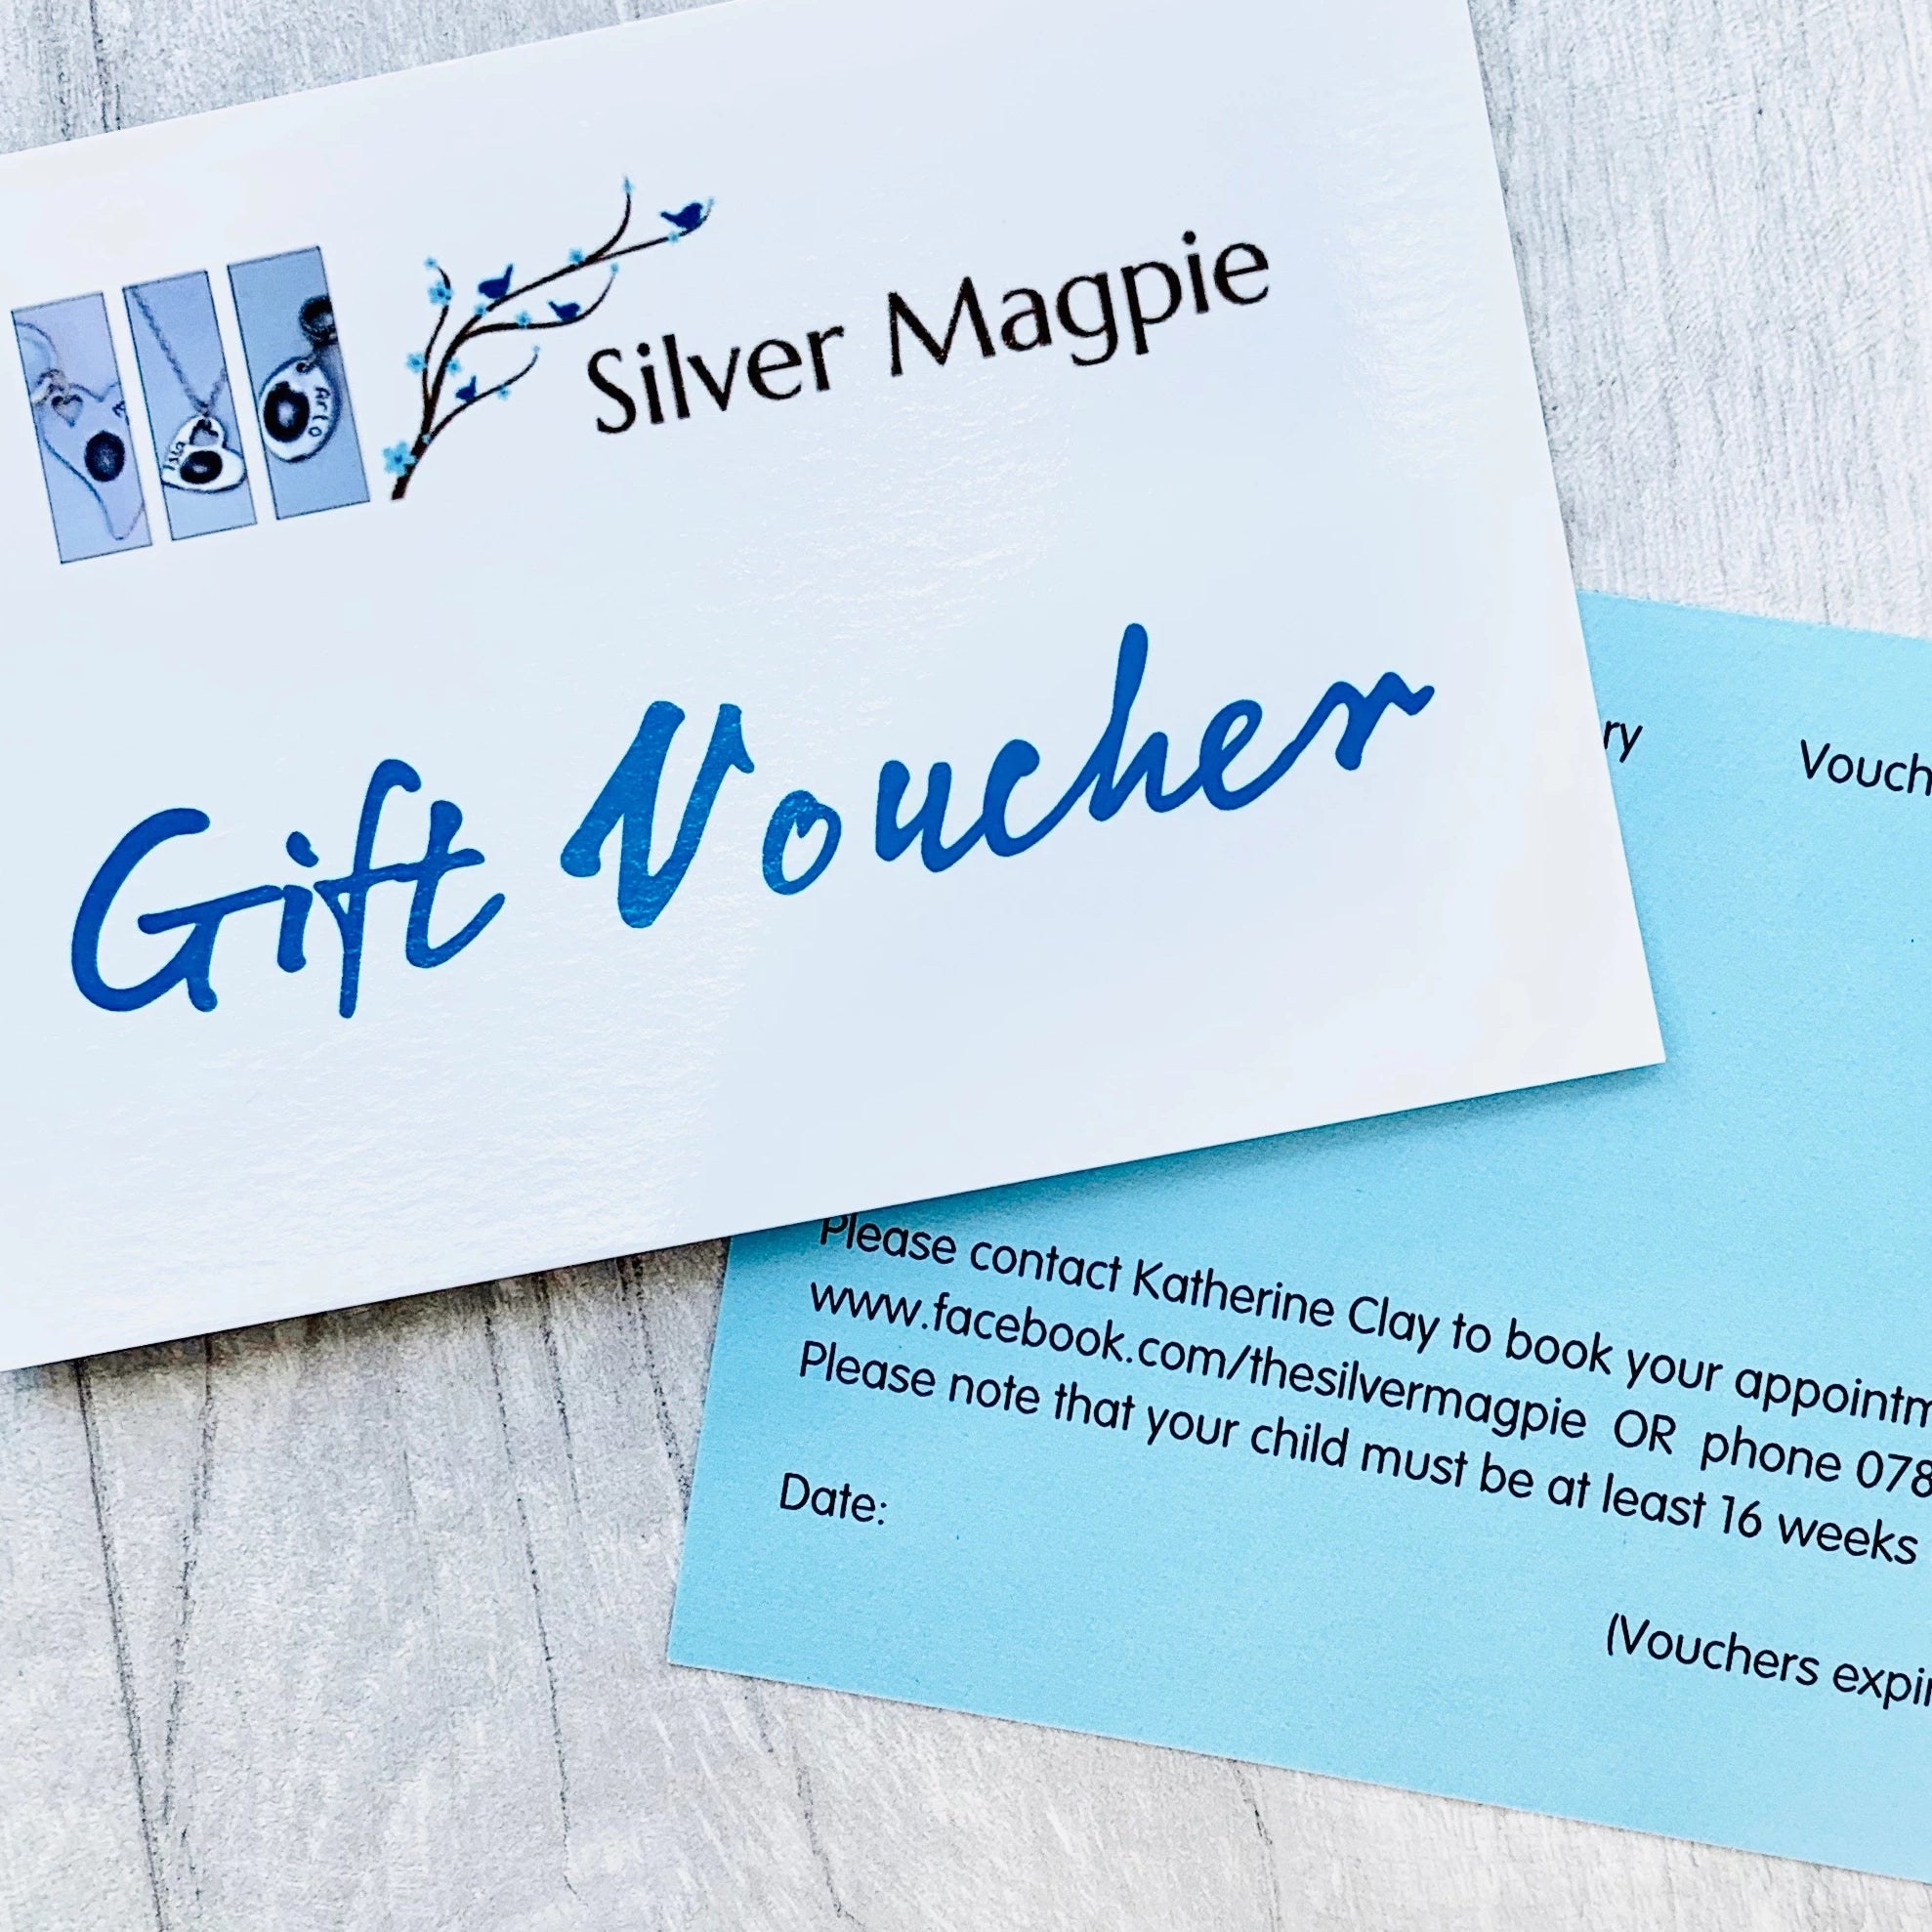 Gift Voucher - Silver Magpie Fingerprint Jewellery